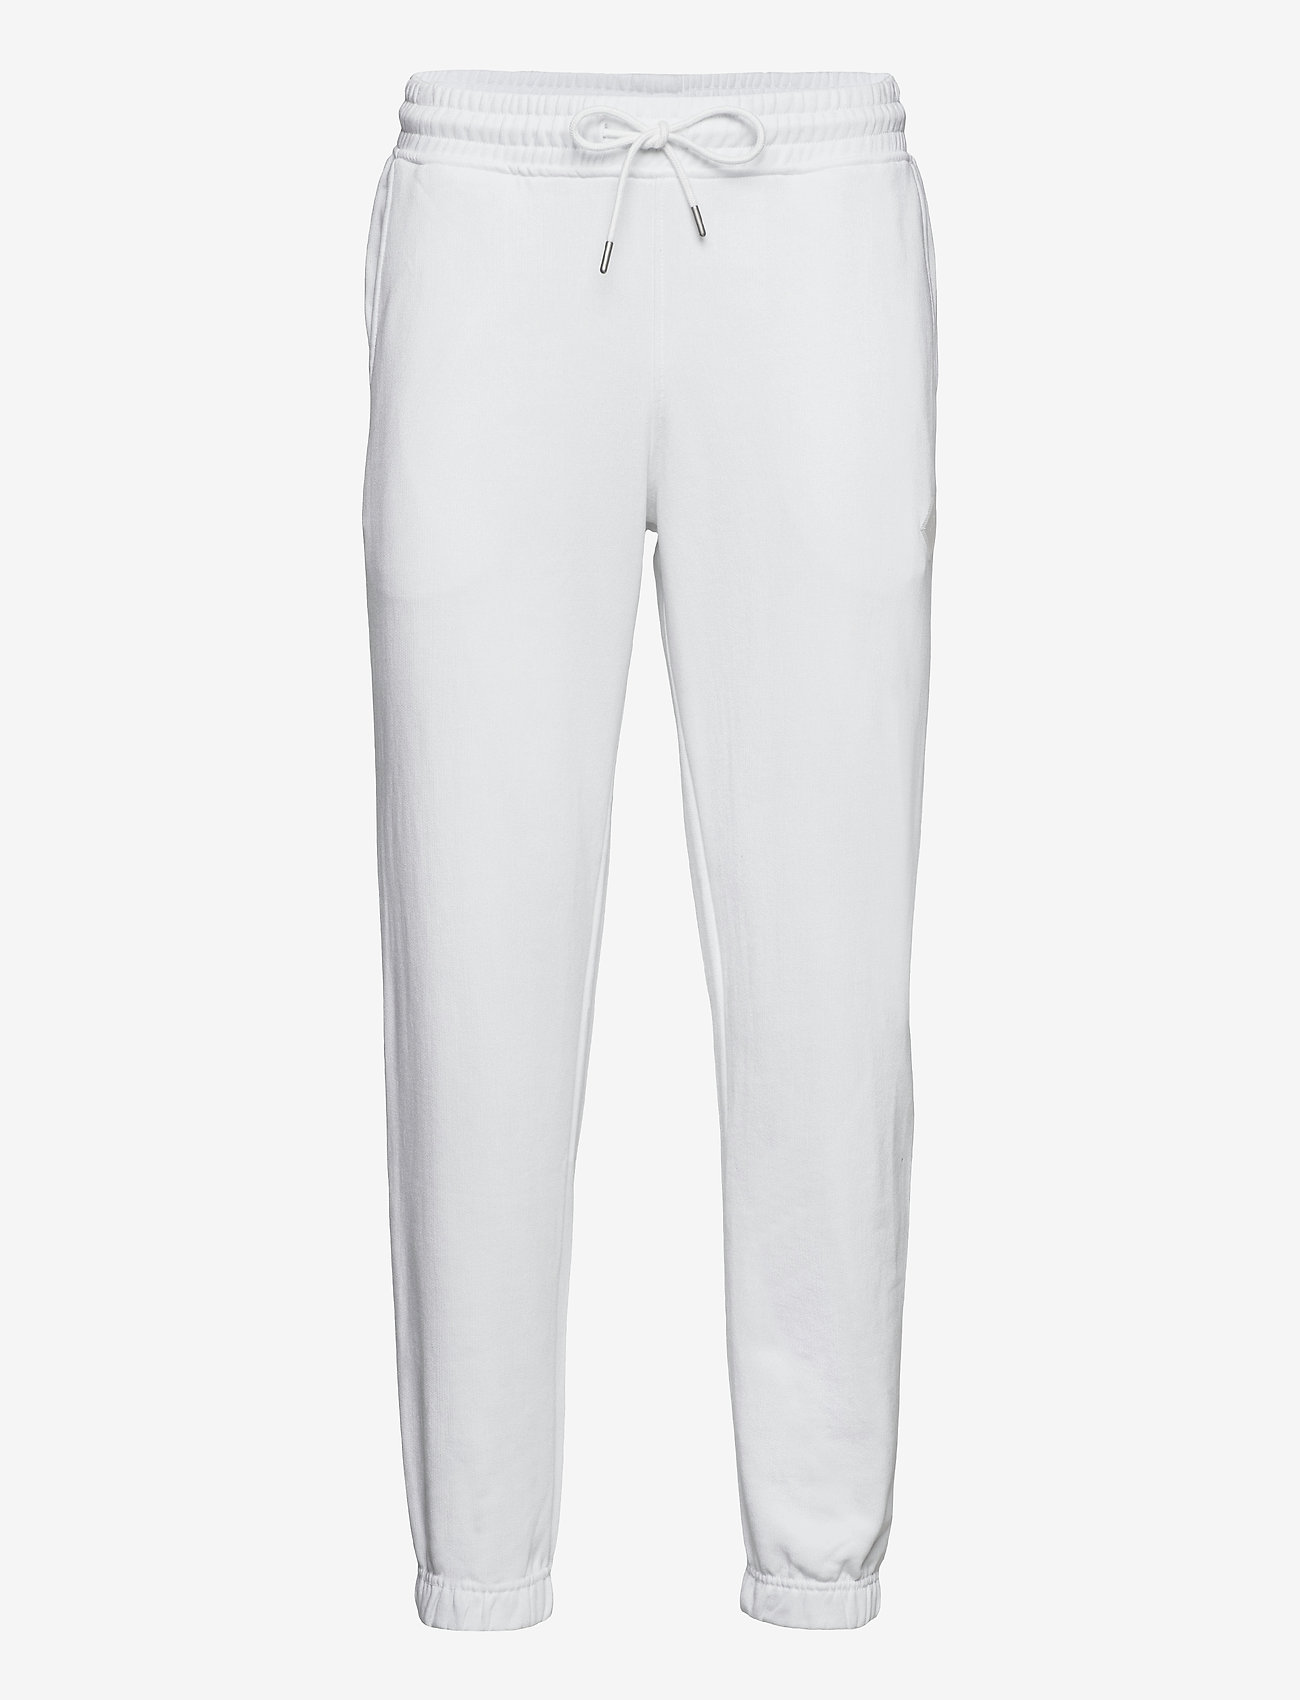 Hanger by Holzweiler - Hanger Trousers - plus size - white - 0